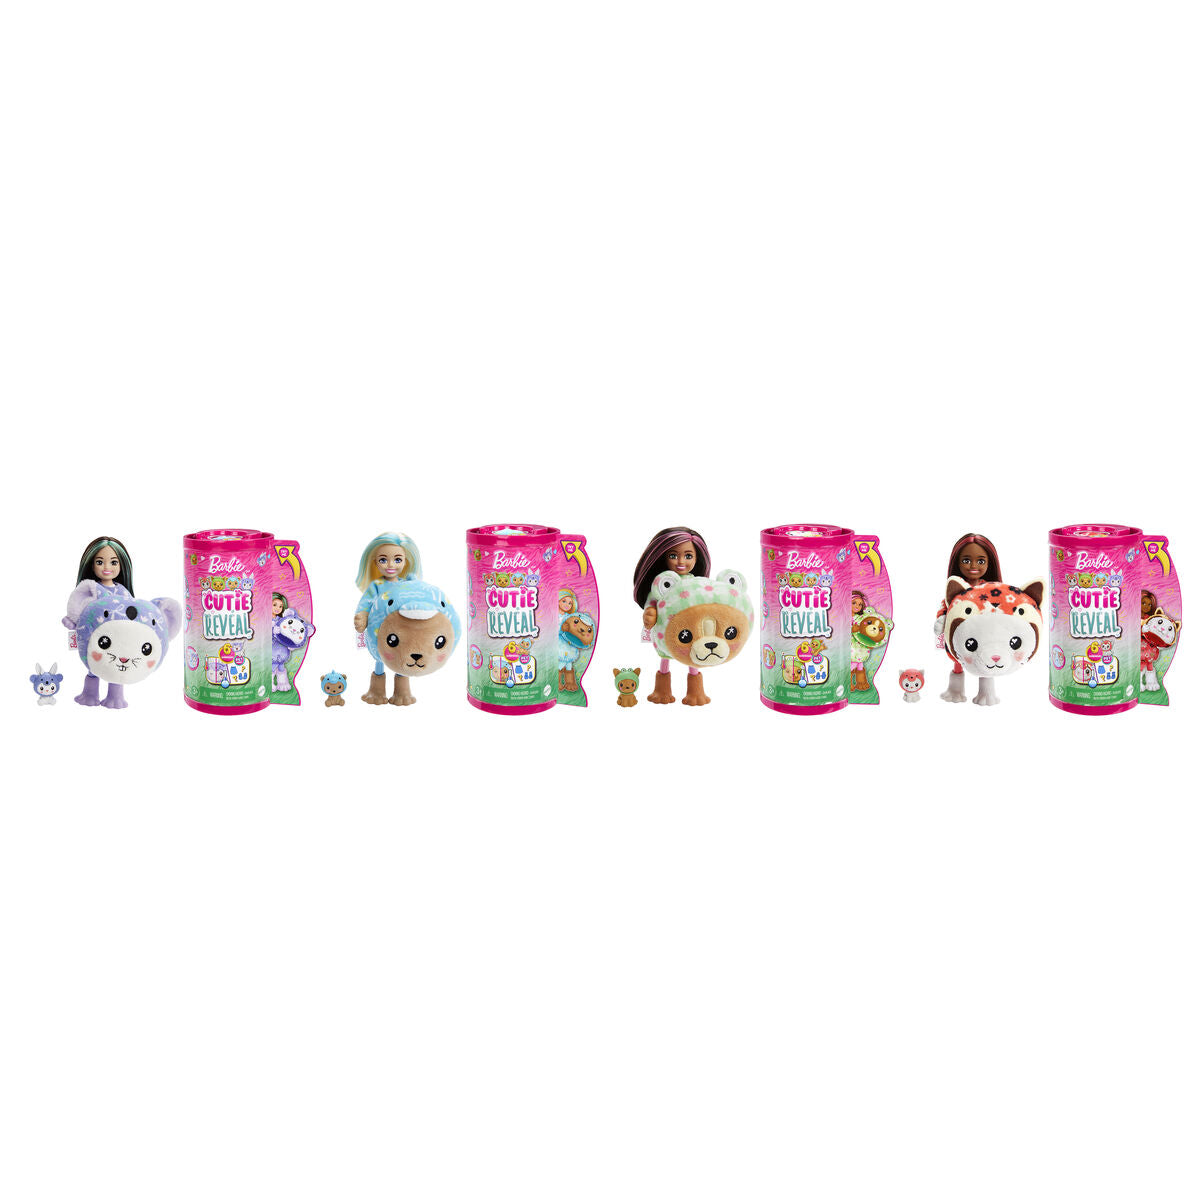 Docka Barbie Chelsea Cutie Reveal Serie Mjukisleksak-Leksaker och spel, Dockor och tillbehör-Barbie-peaceofhome.se